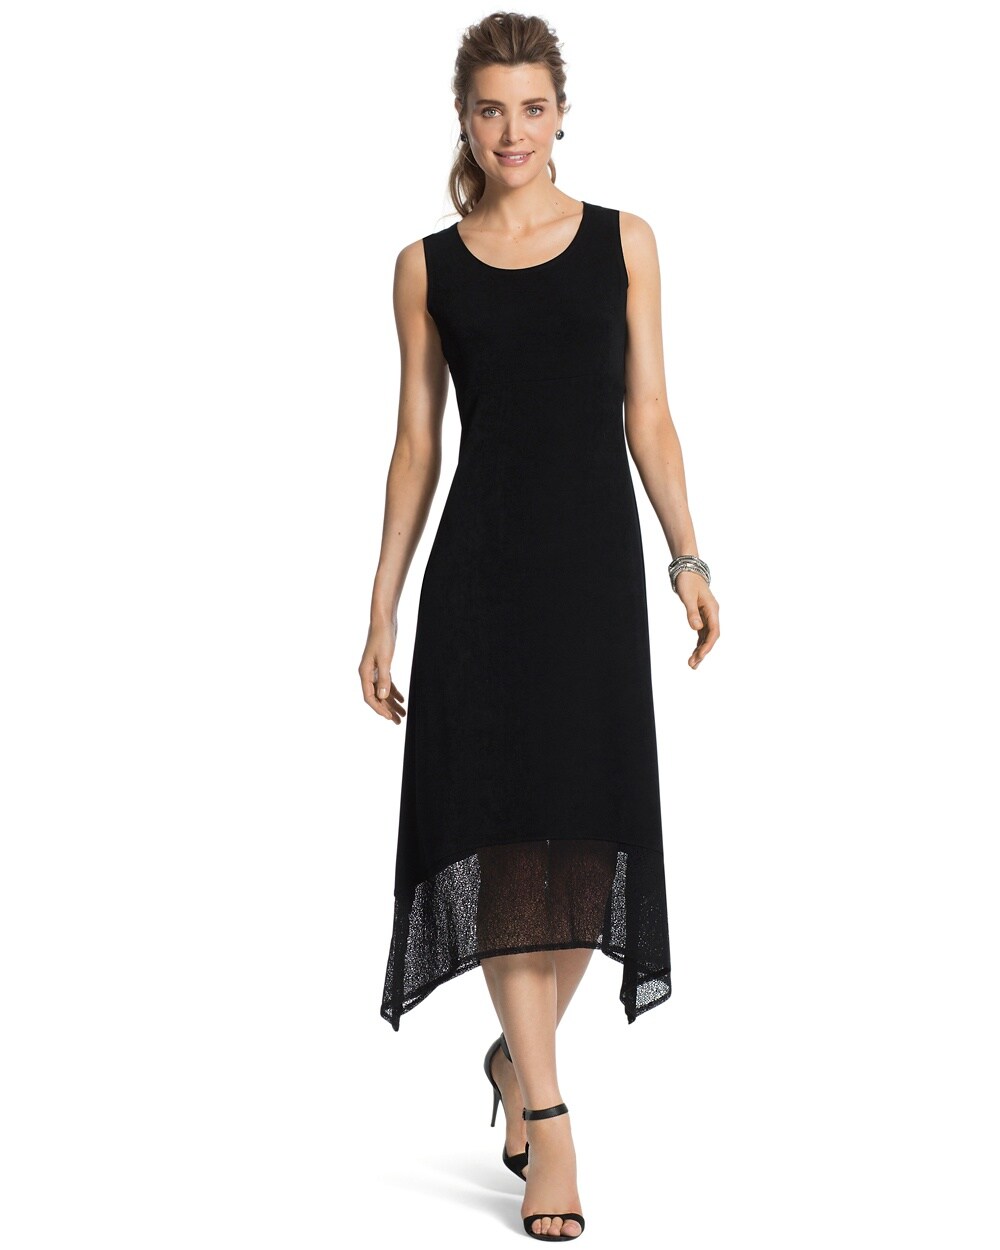 Travelers Classic Sleeveless Black Dress